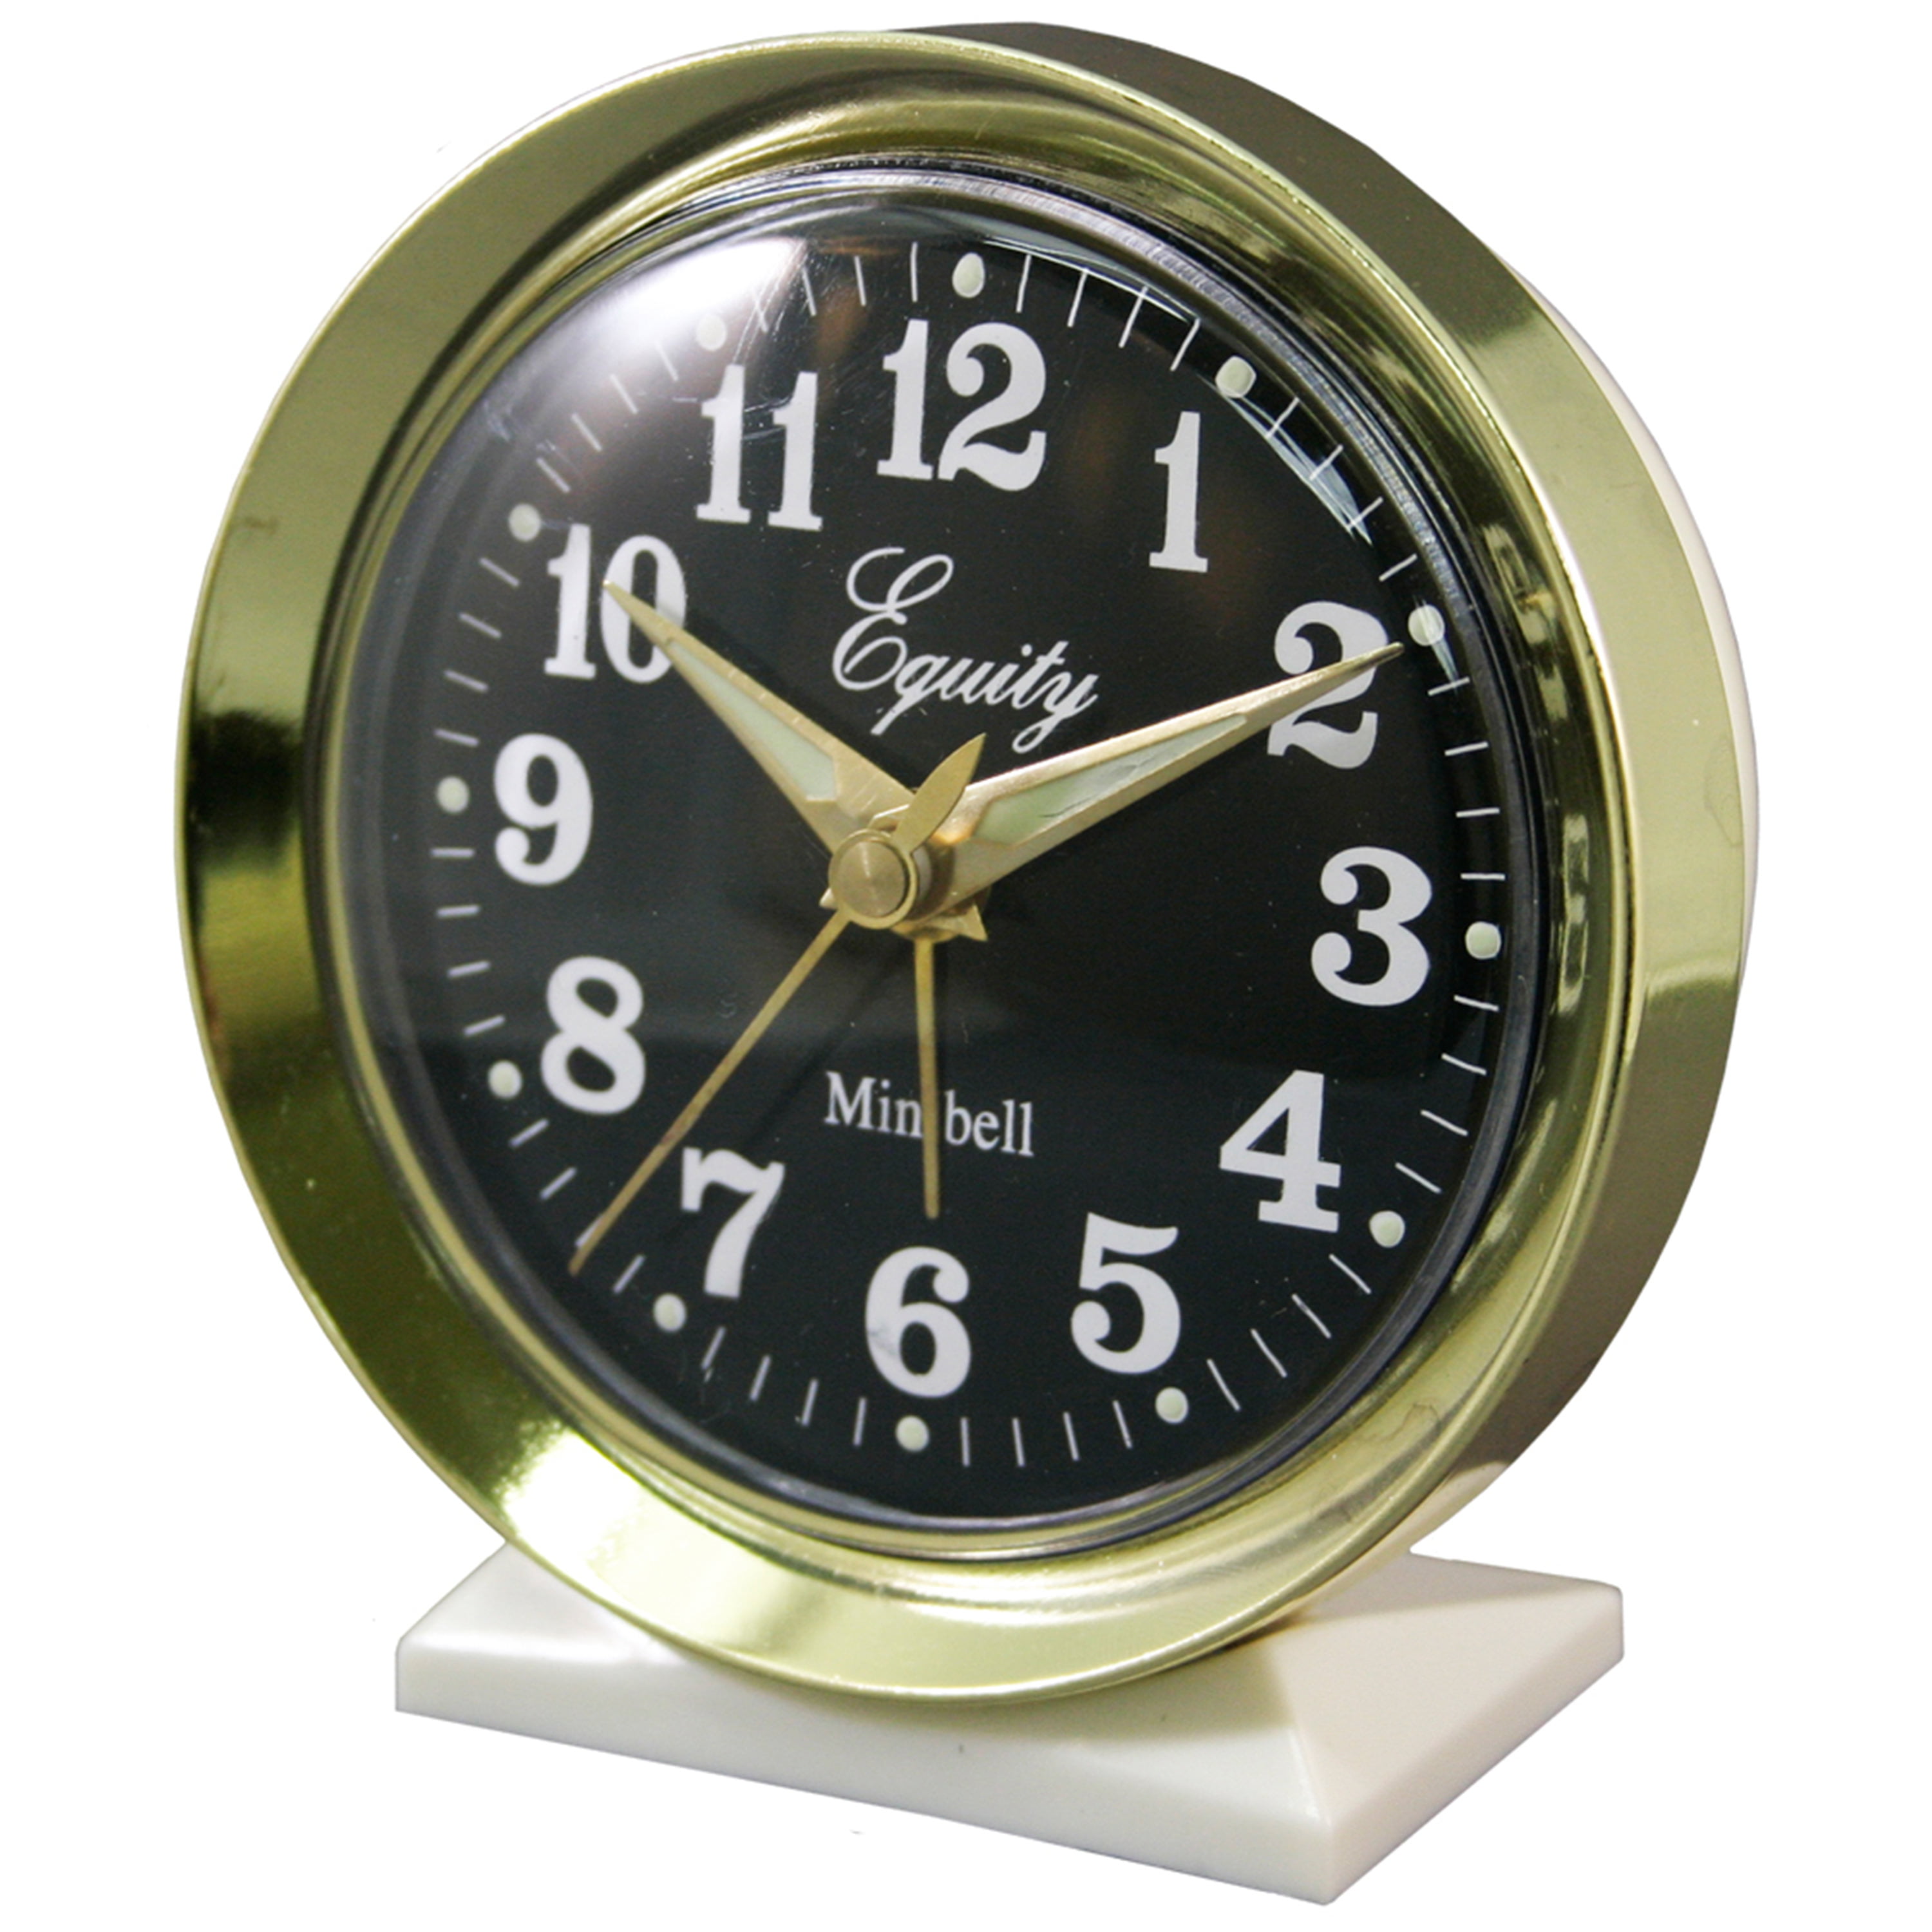 12020 Equity by La Crosse Wind-Up Bell Brass Metal Case Analog Alarm Clock 